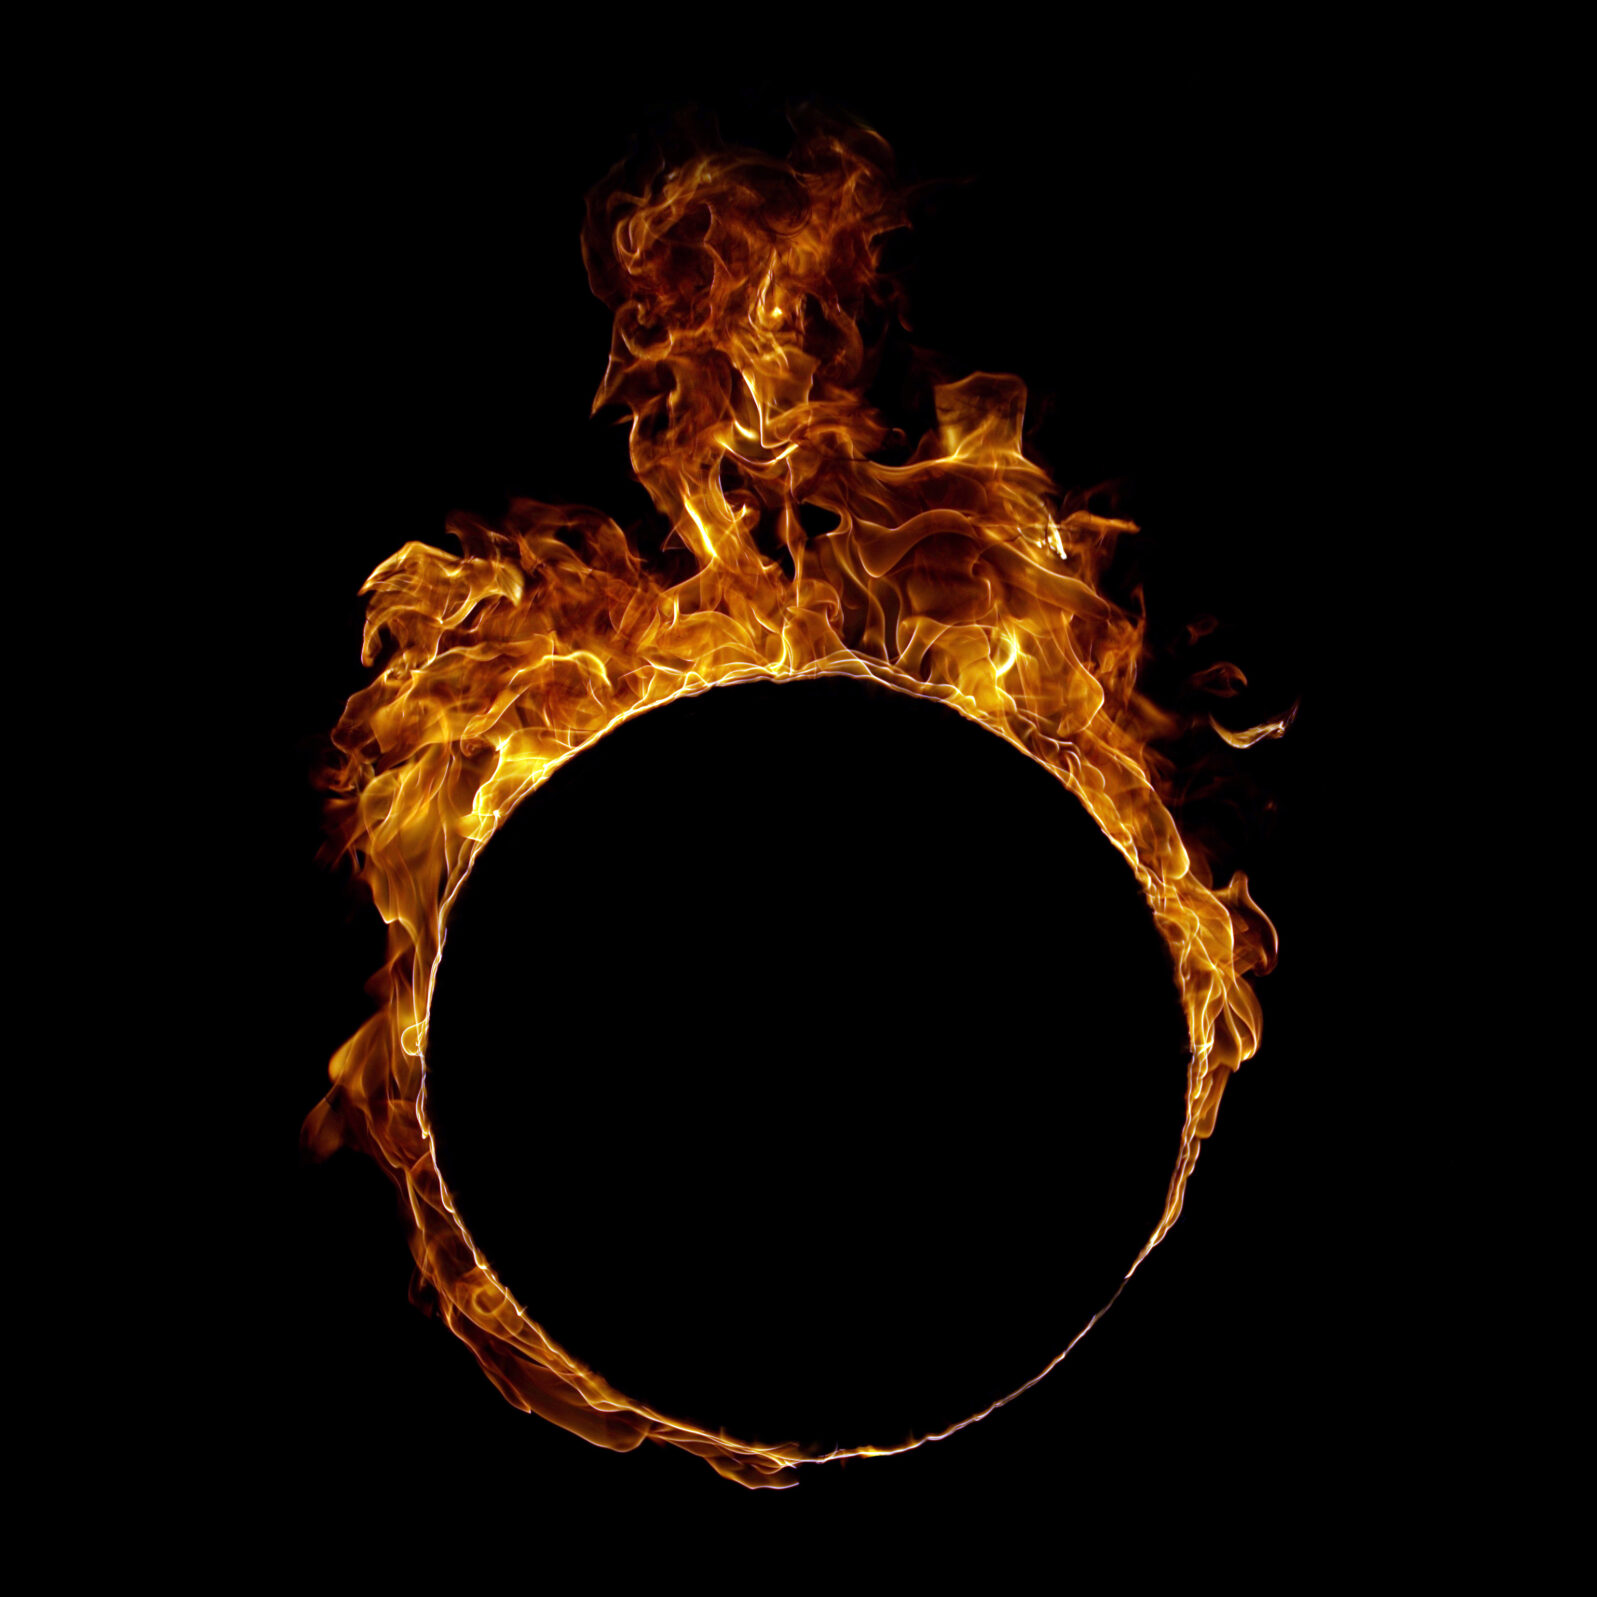 Ring fire in black